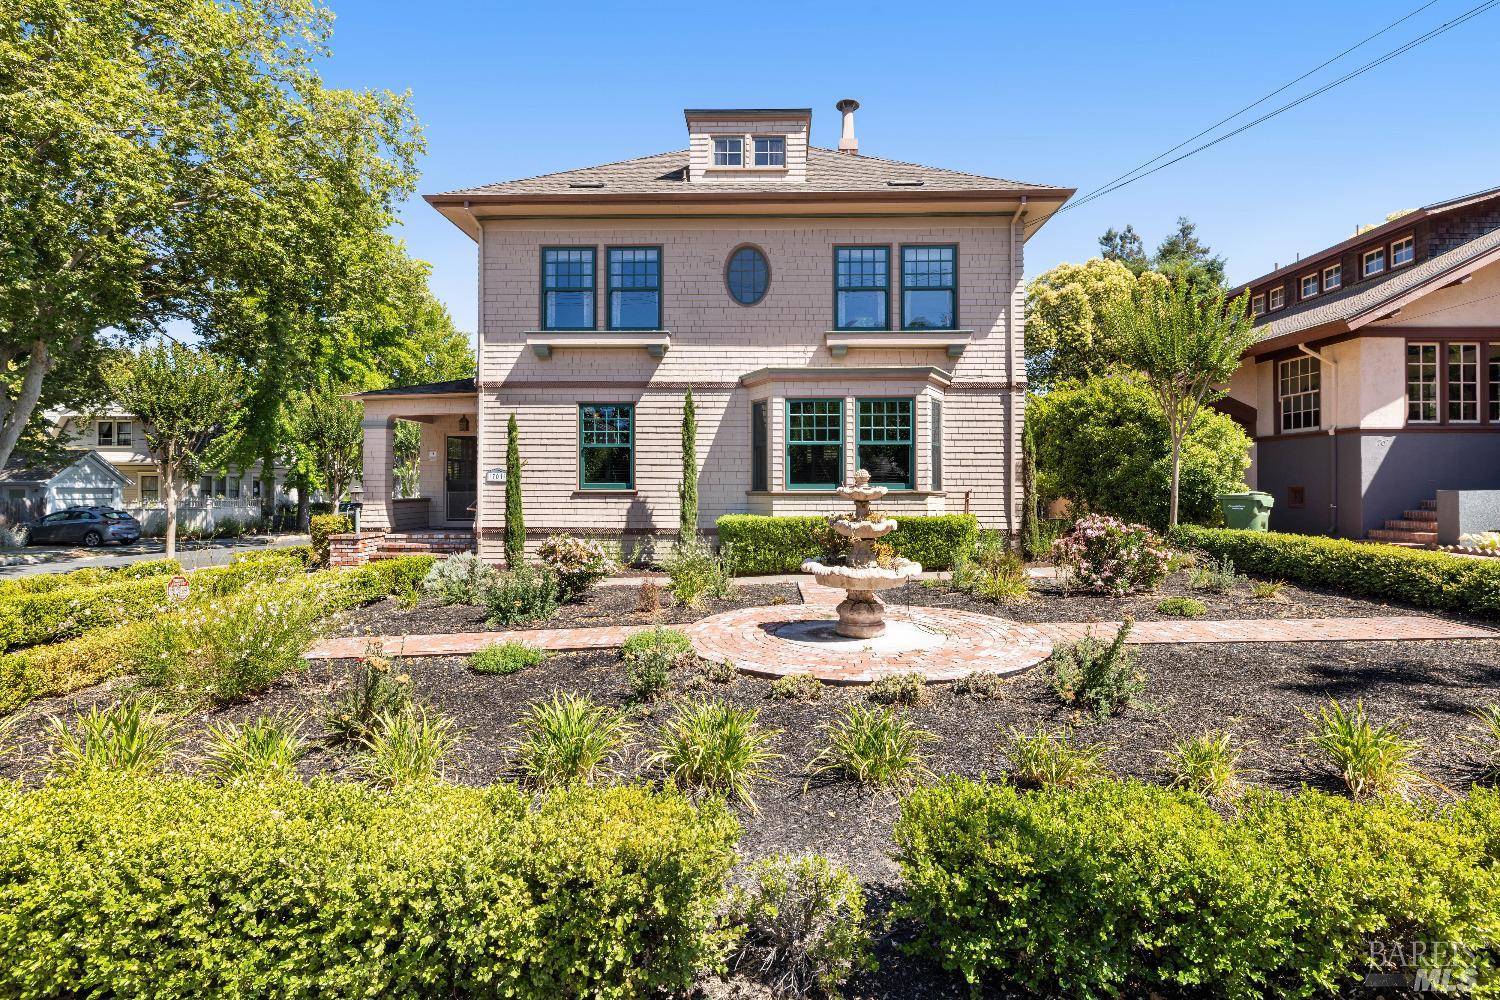 Homes for sale in Petaluma | View 701 D Street | 4 Beds, 1 Bath